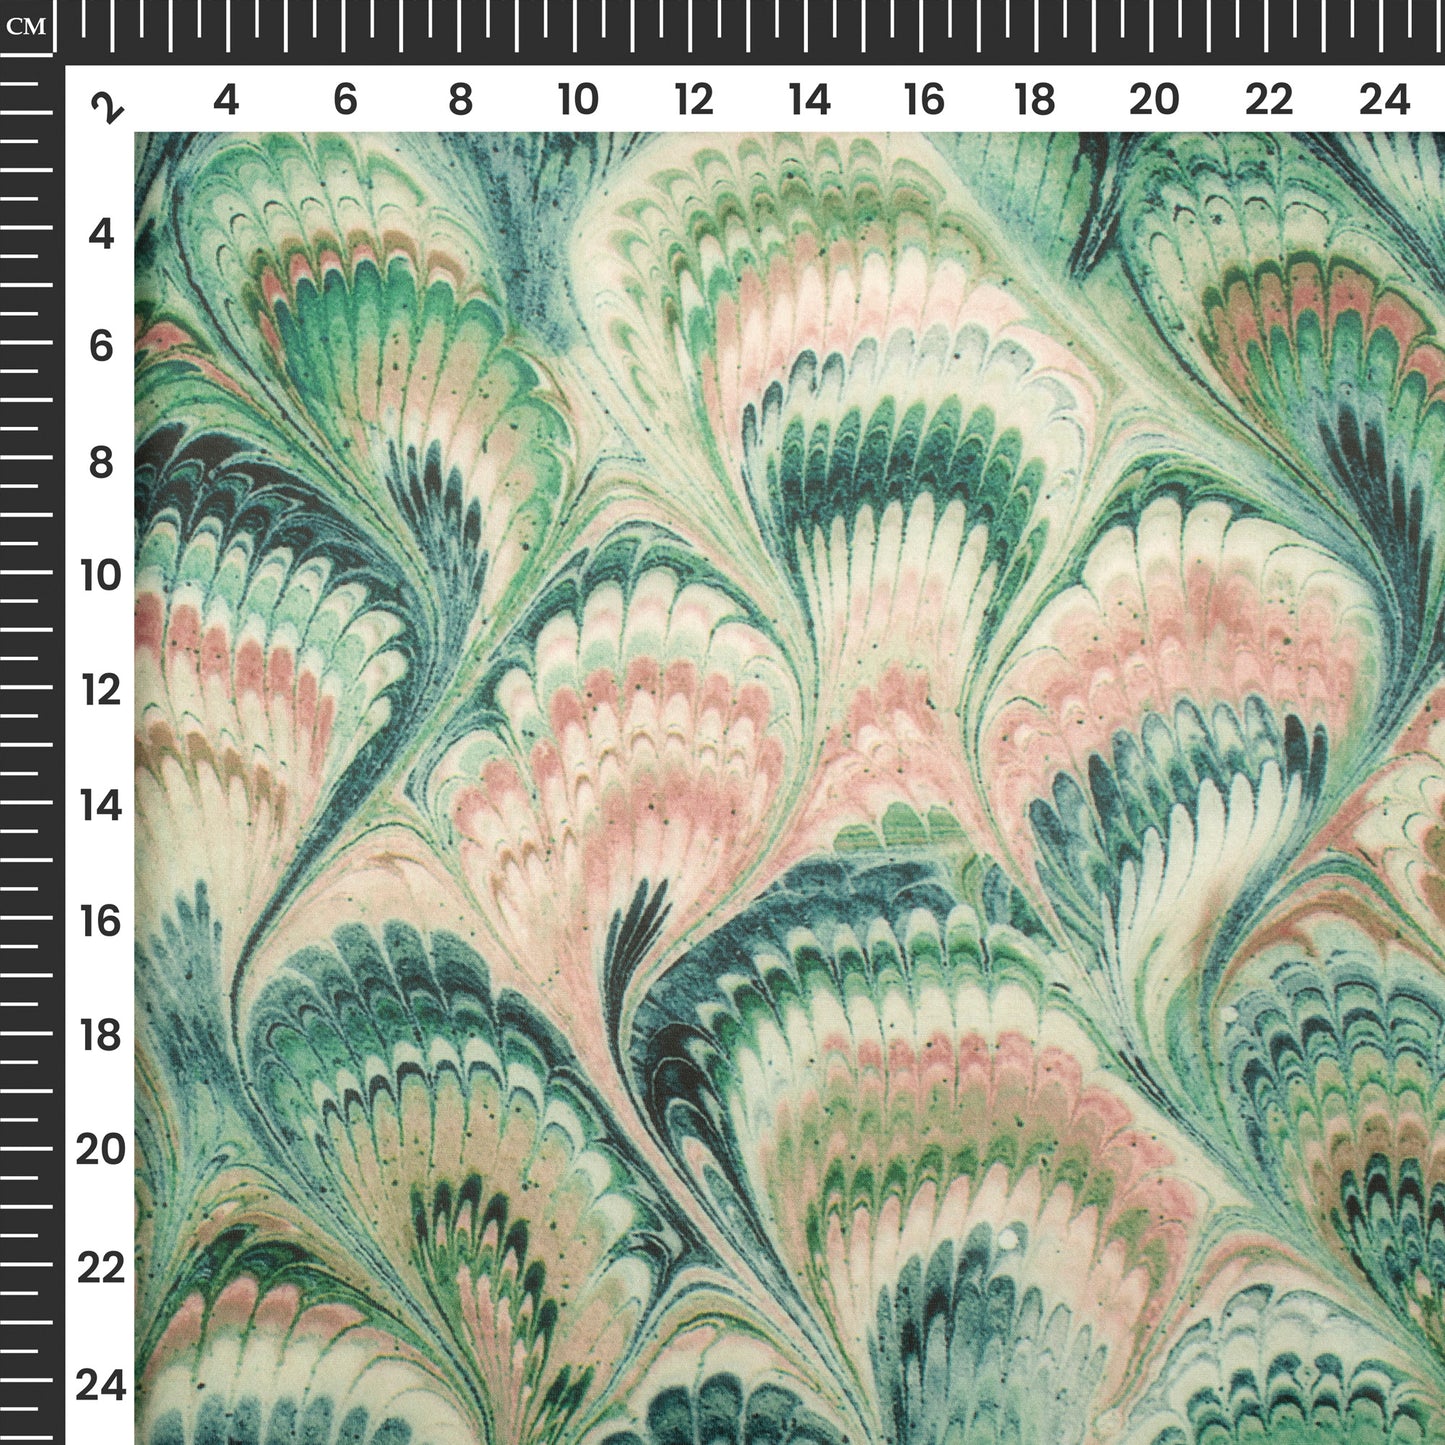 Forest Green Floral Digital Print Organza Satin Fabric